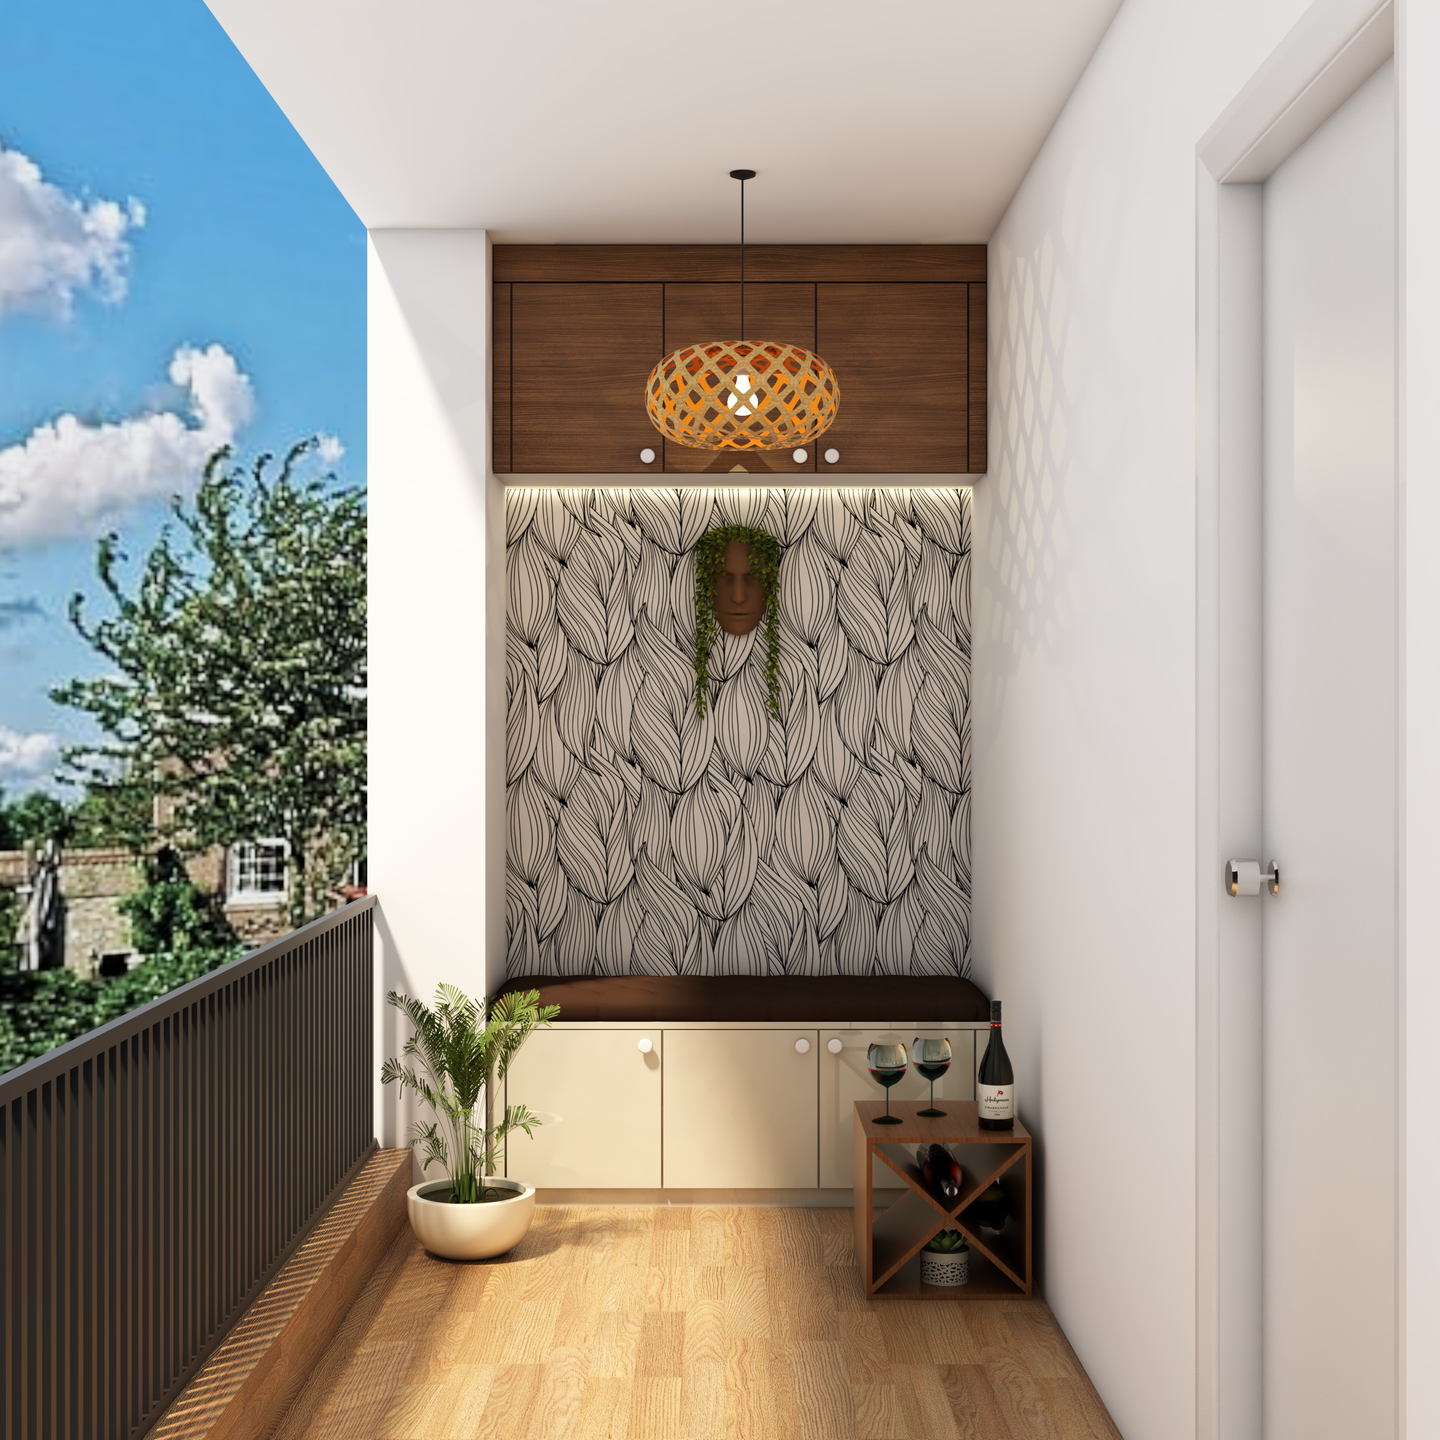 Contemporary Balcony Design With Black And White Wallpaper - Livspace